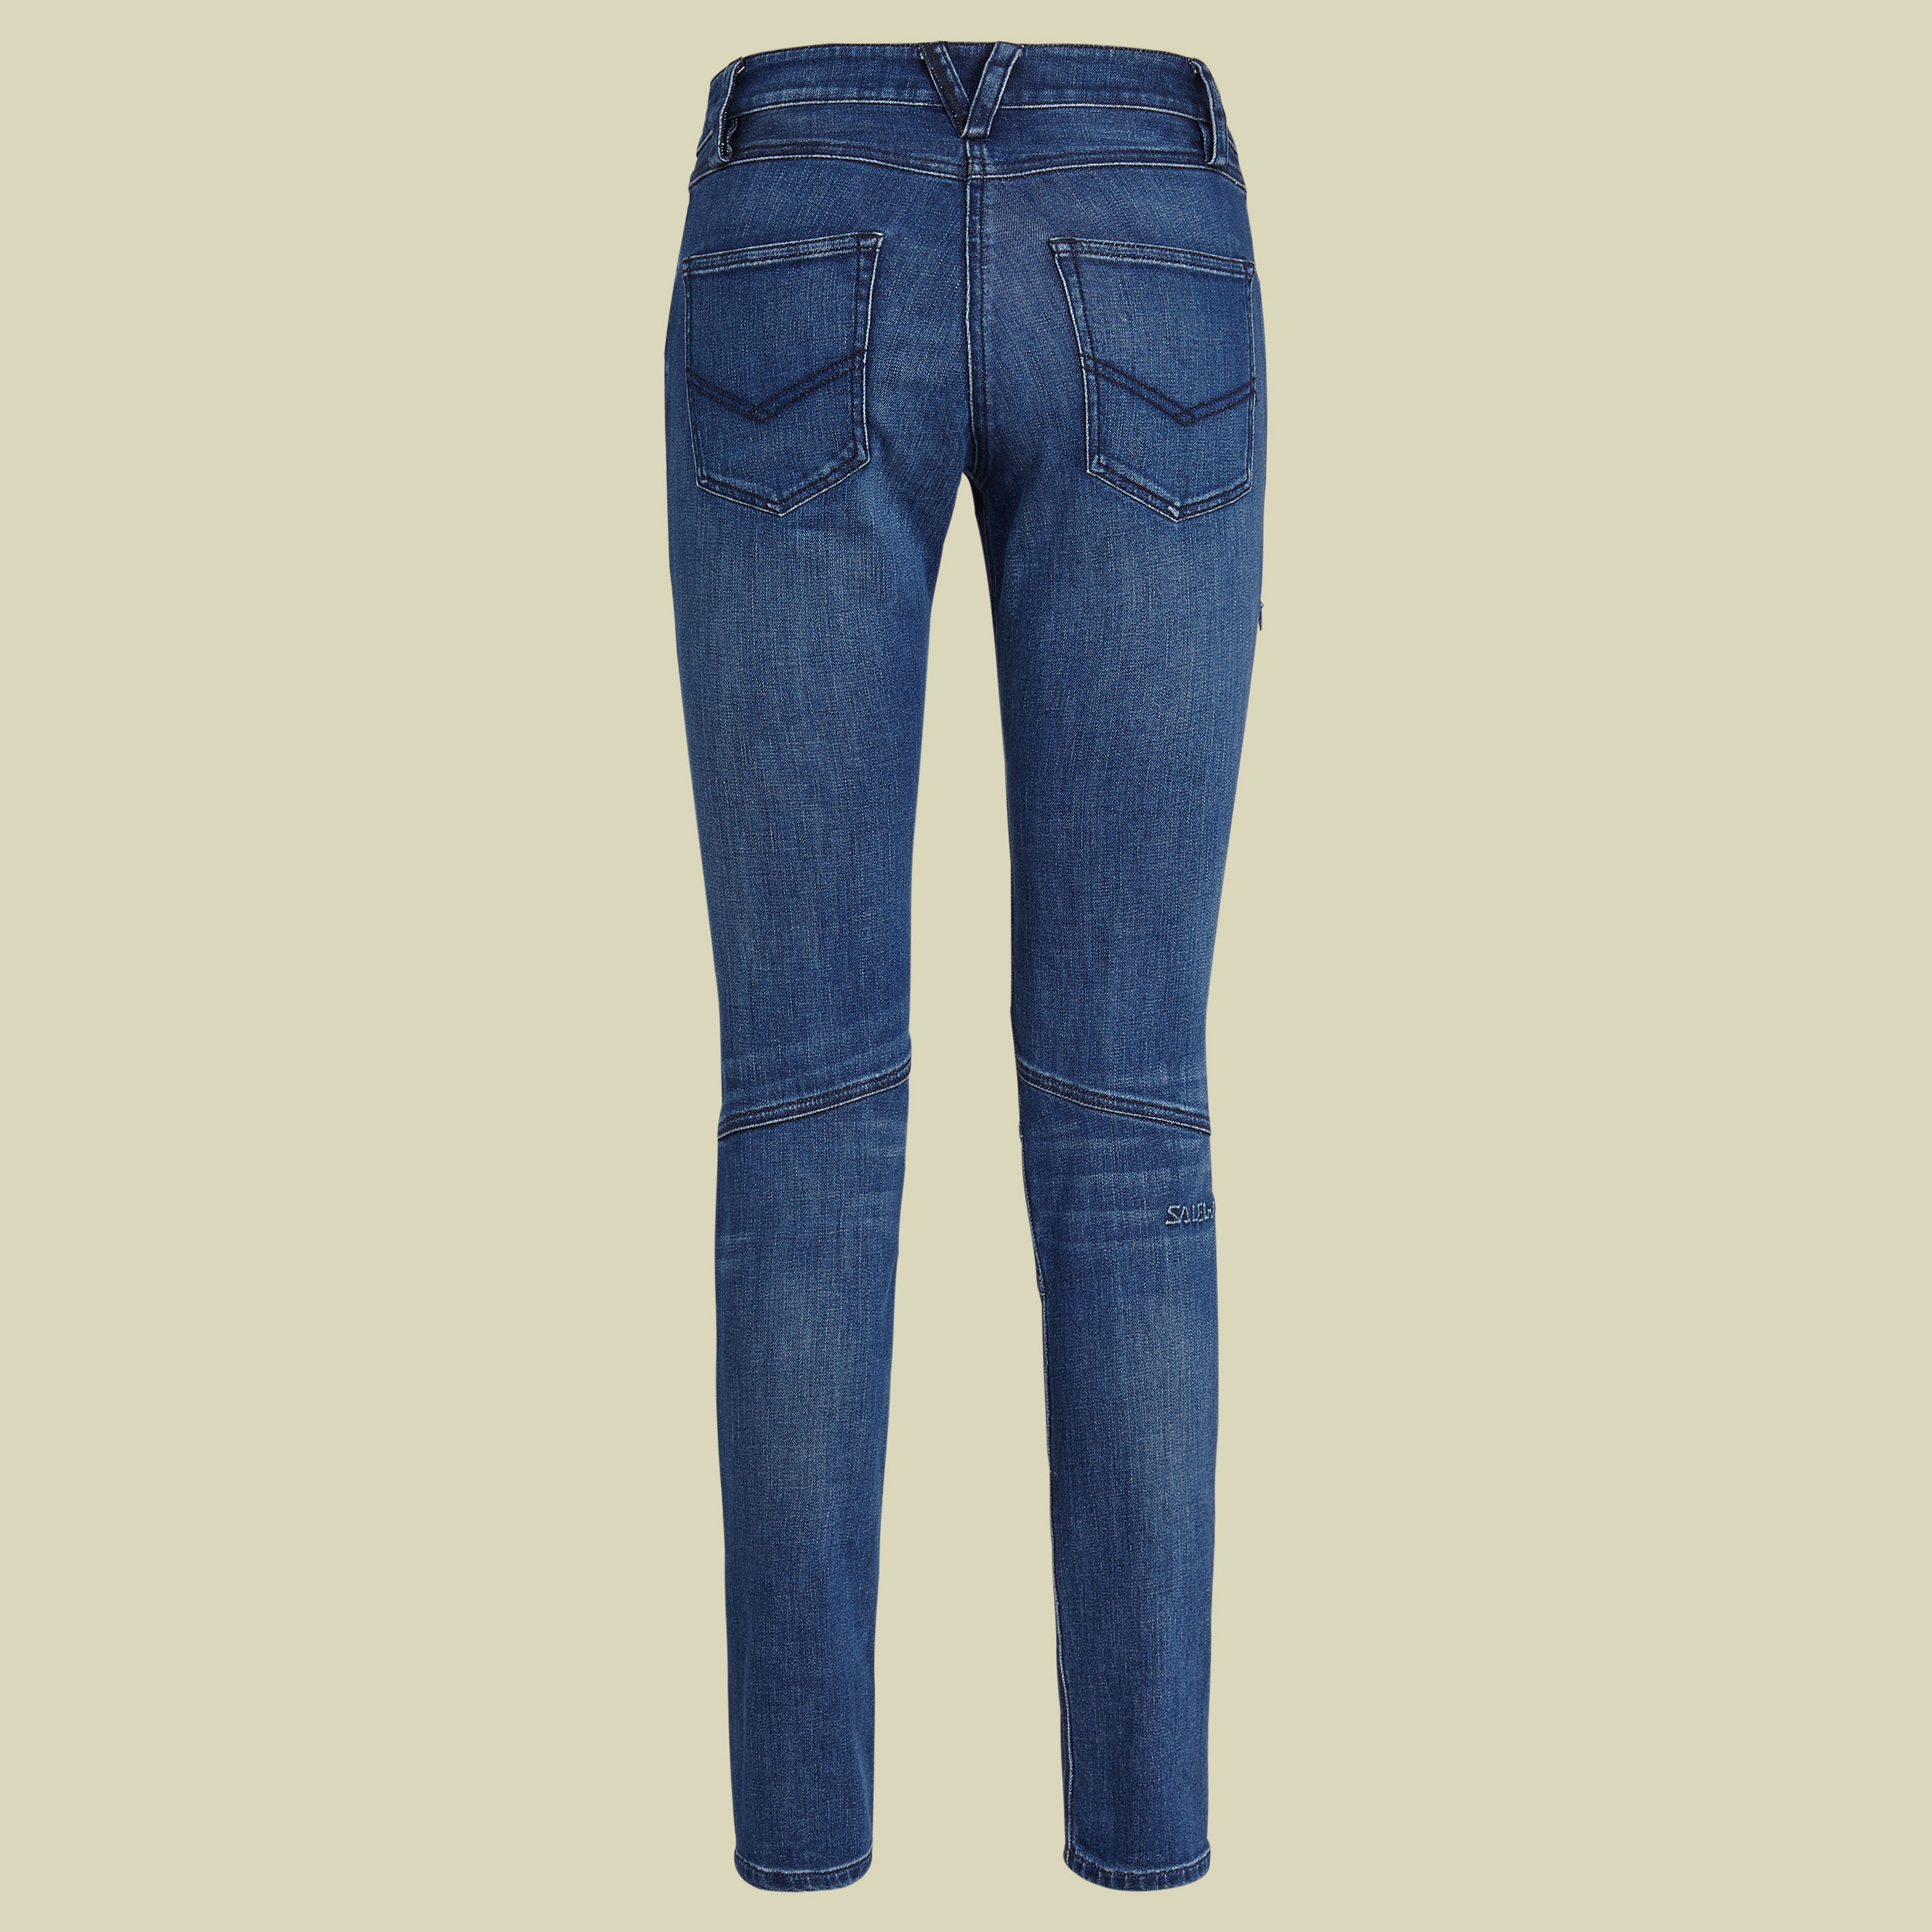 Agner Denim CO Pant Women Größe 36 Farbe jeans blue